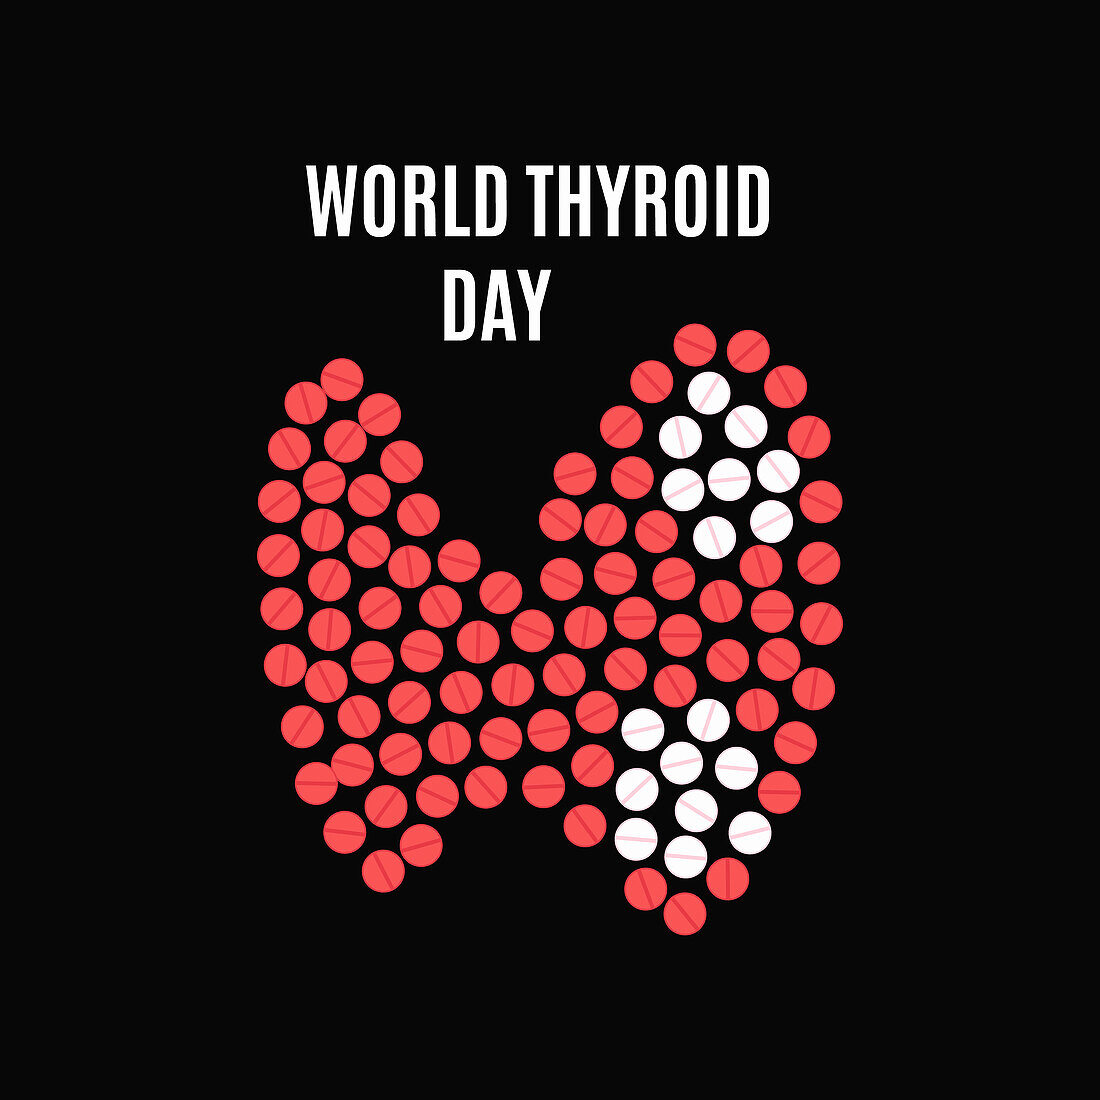 Thyroid disorder, conceptual illustration